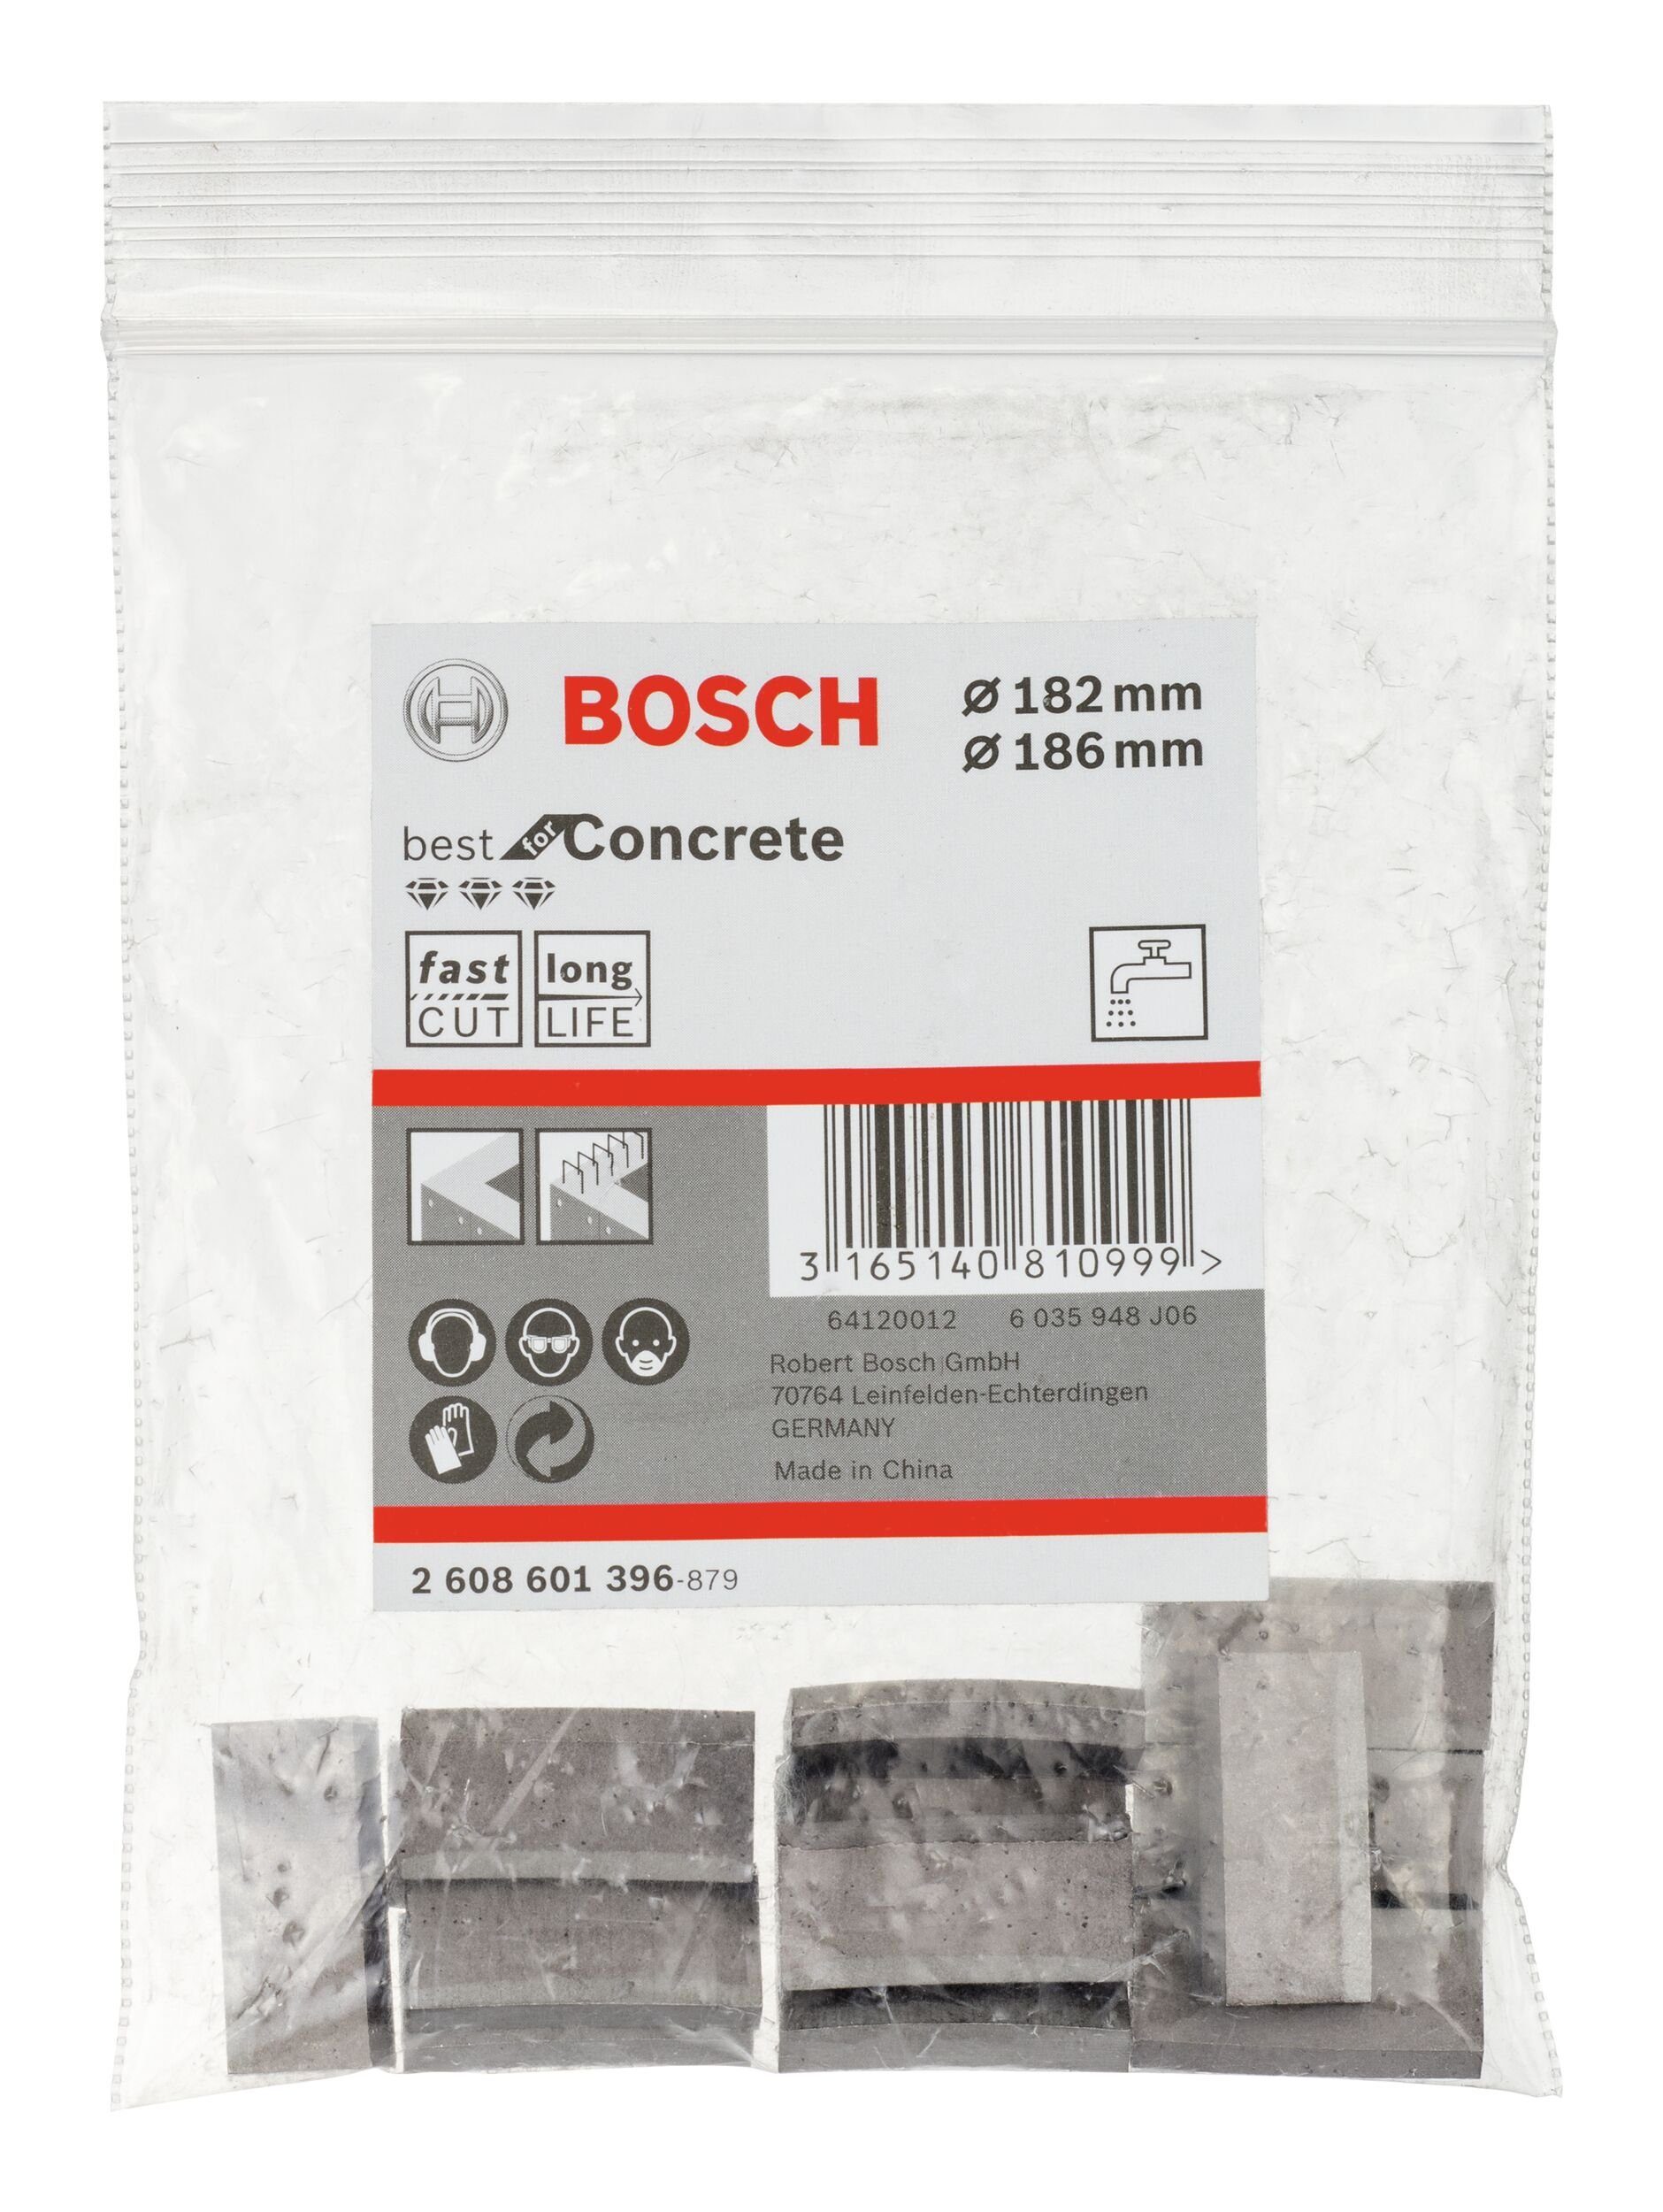 13 f. Concrete UNC 1 Diamantbohrkronen BOSCH 1/4" Best Bohrkrone, Segmente for